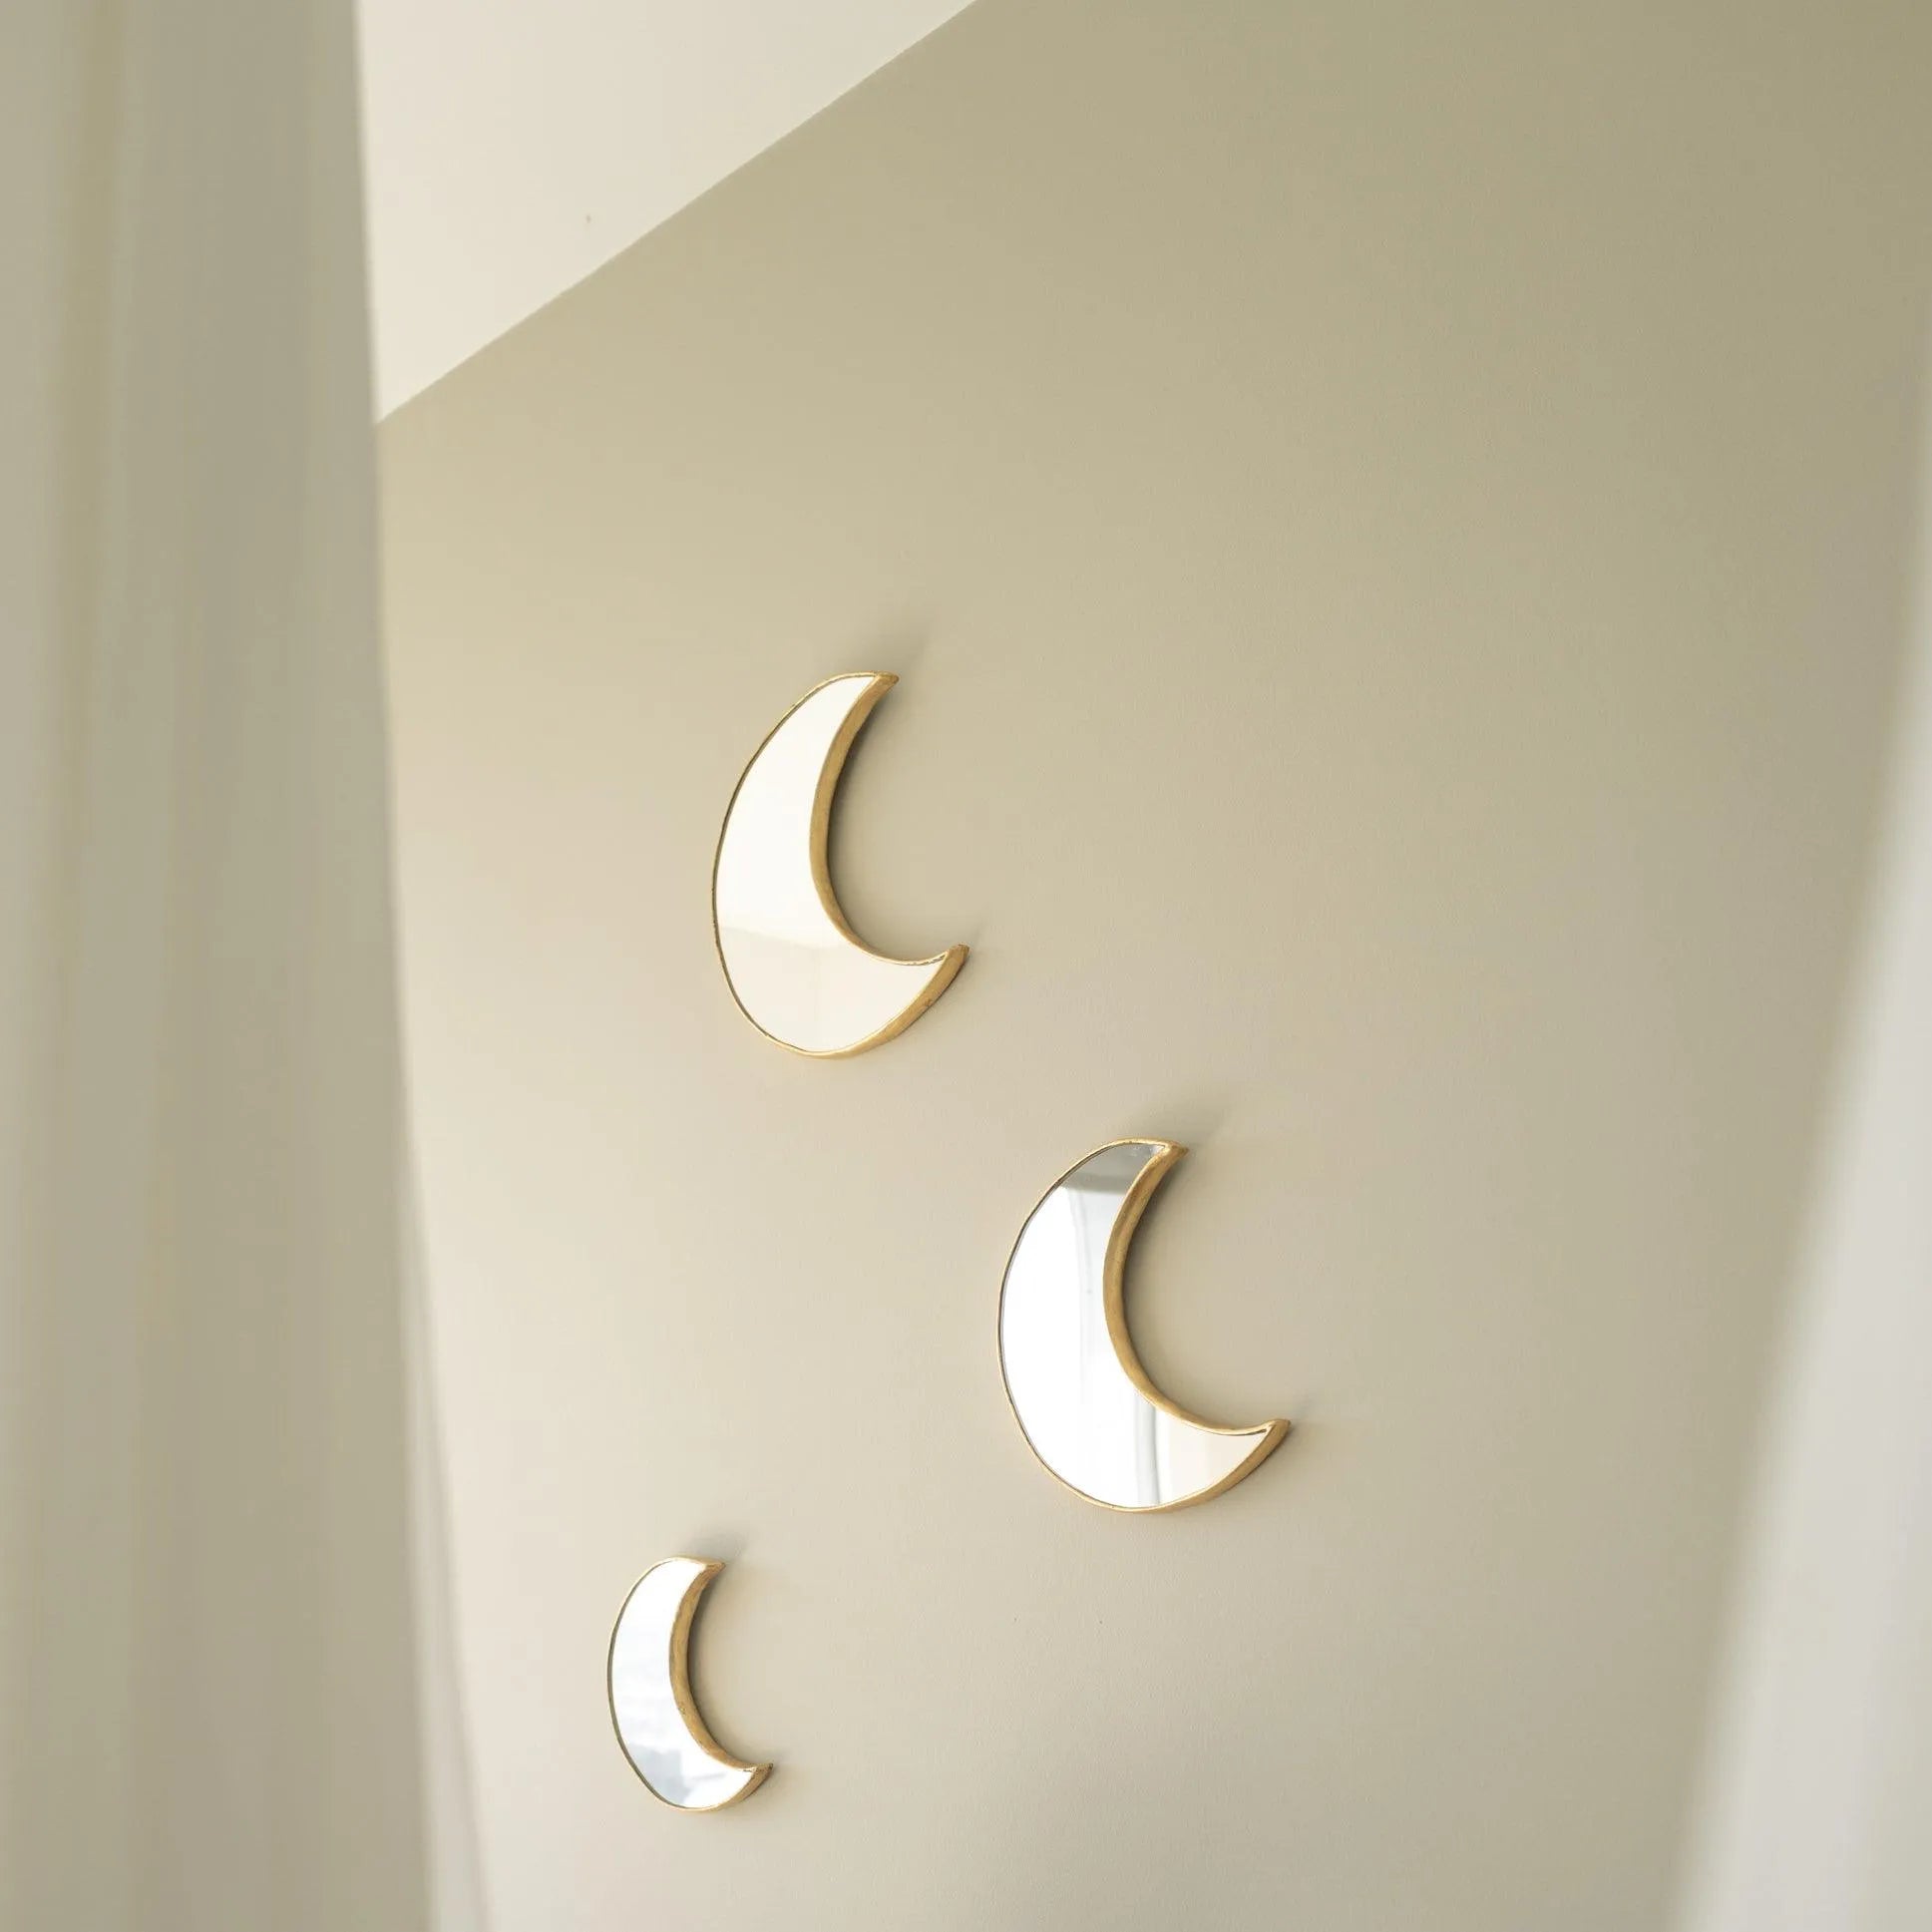 peruvian-wall-mirror-crescent-moon-luna-sundara-10 - Luna Sundara